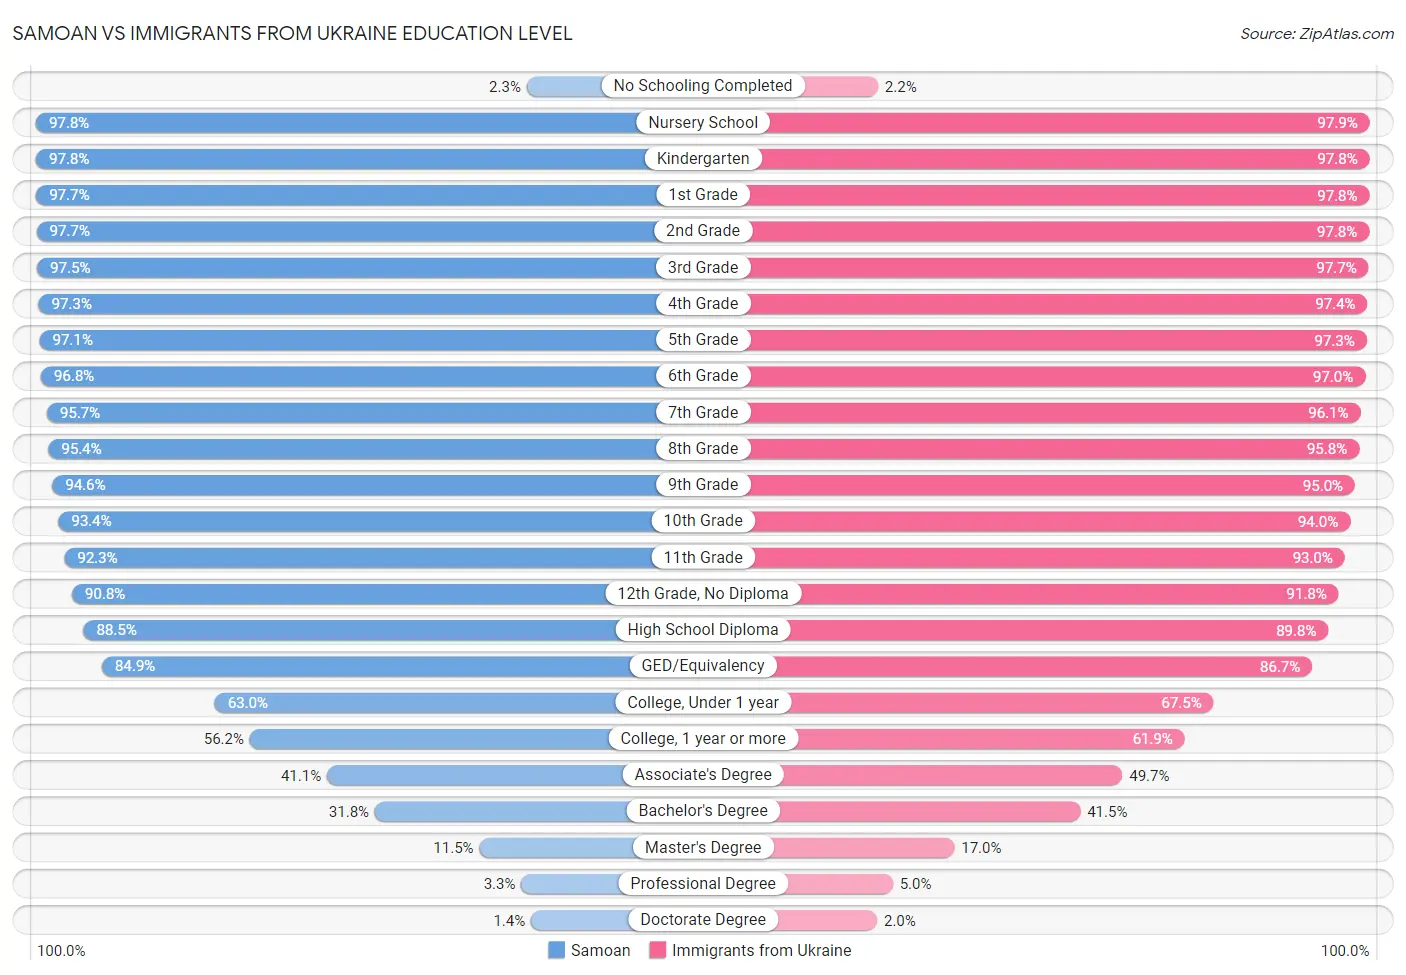 Samoan vs Immigrants from Ukraine Education Level